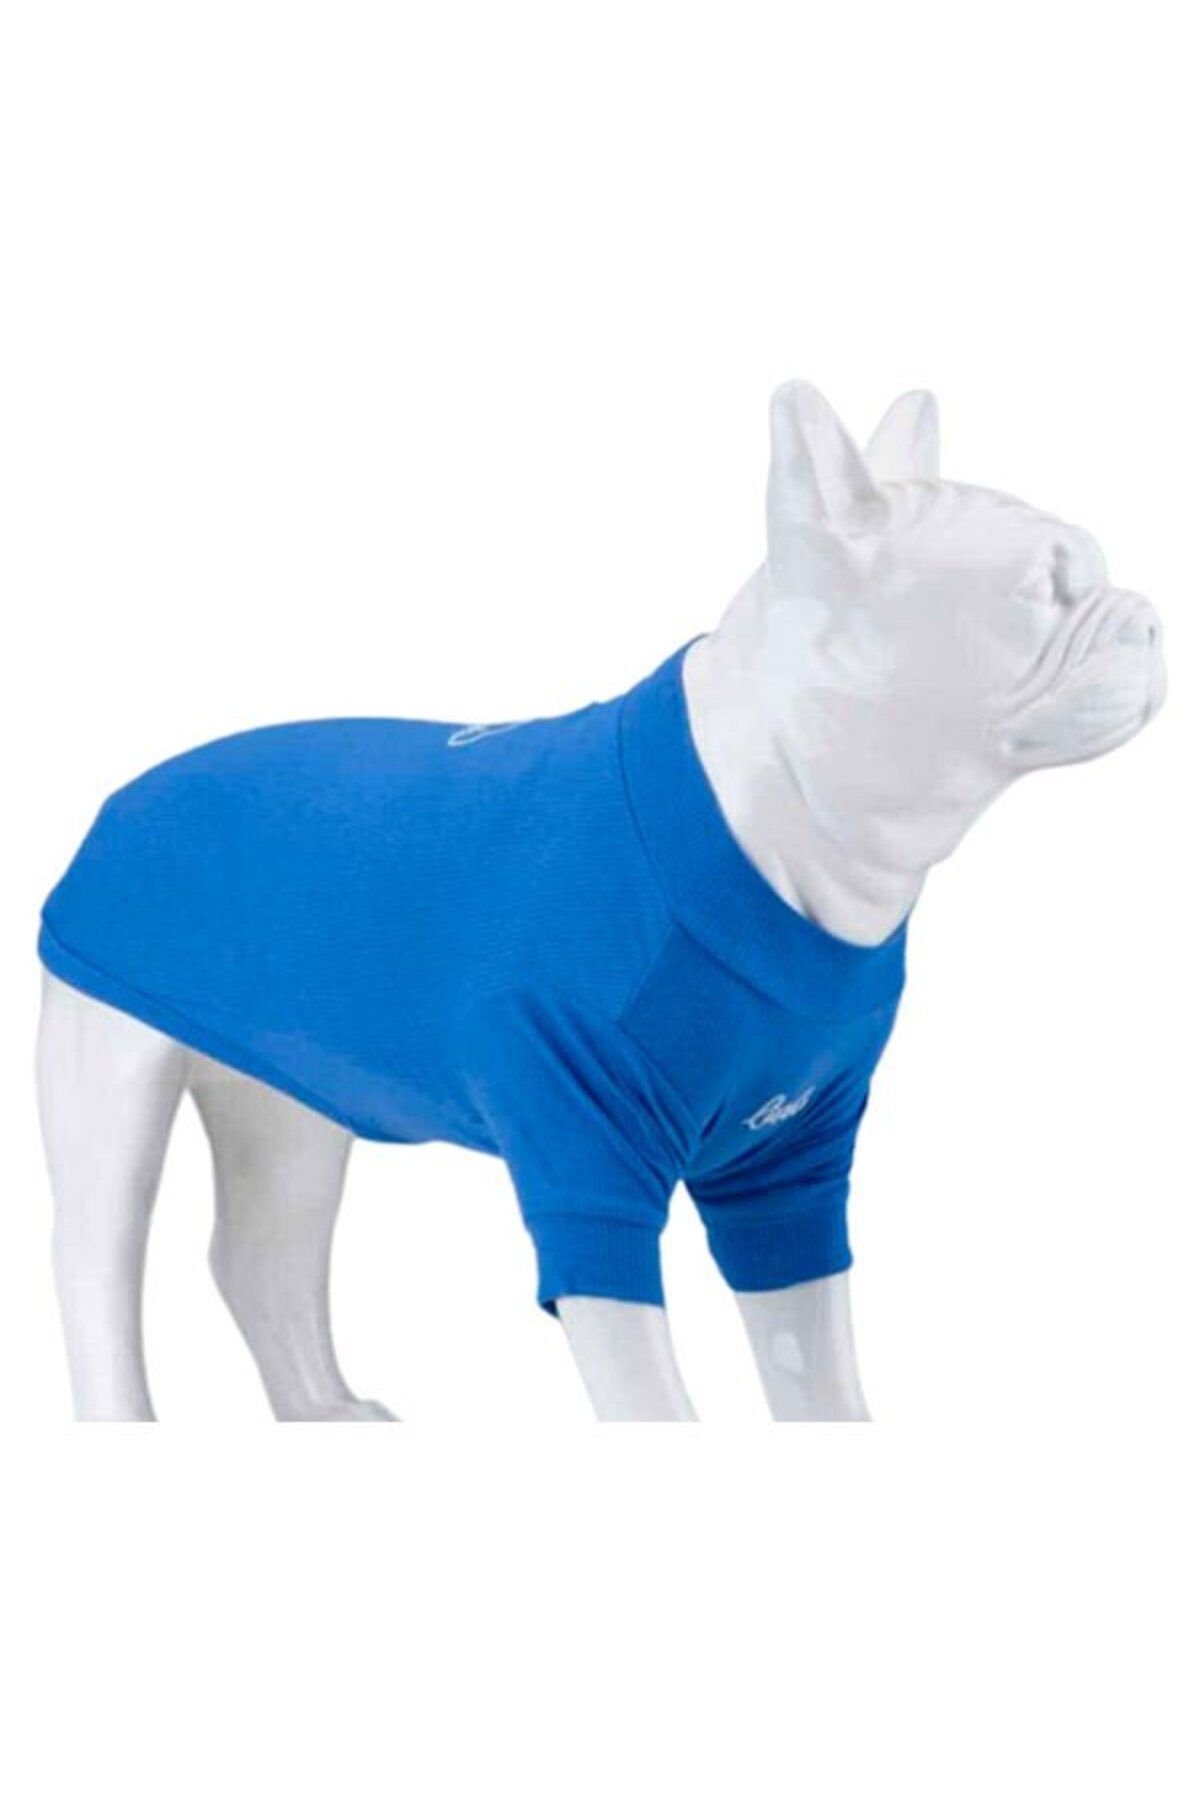 Lindodogs Lindo Dogs On The Clouds Köpek Kıyafeti Tshirt Mavi Beden 5 - OTC05